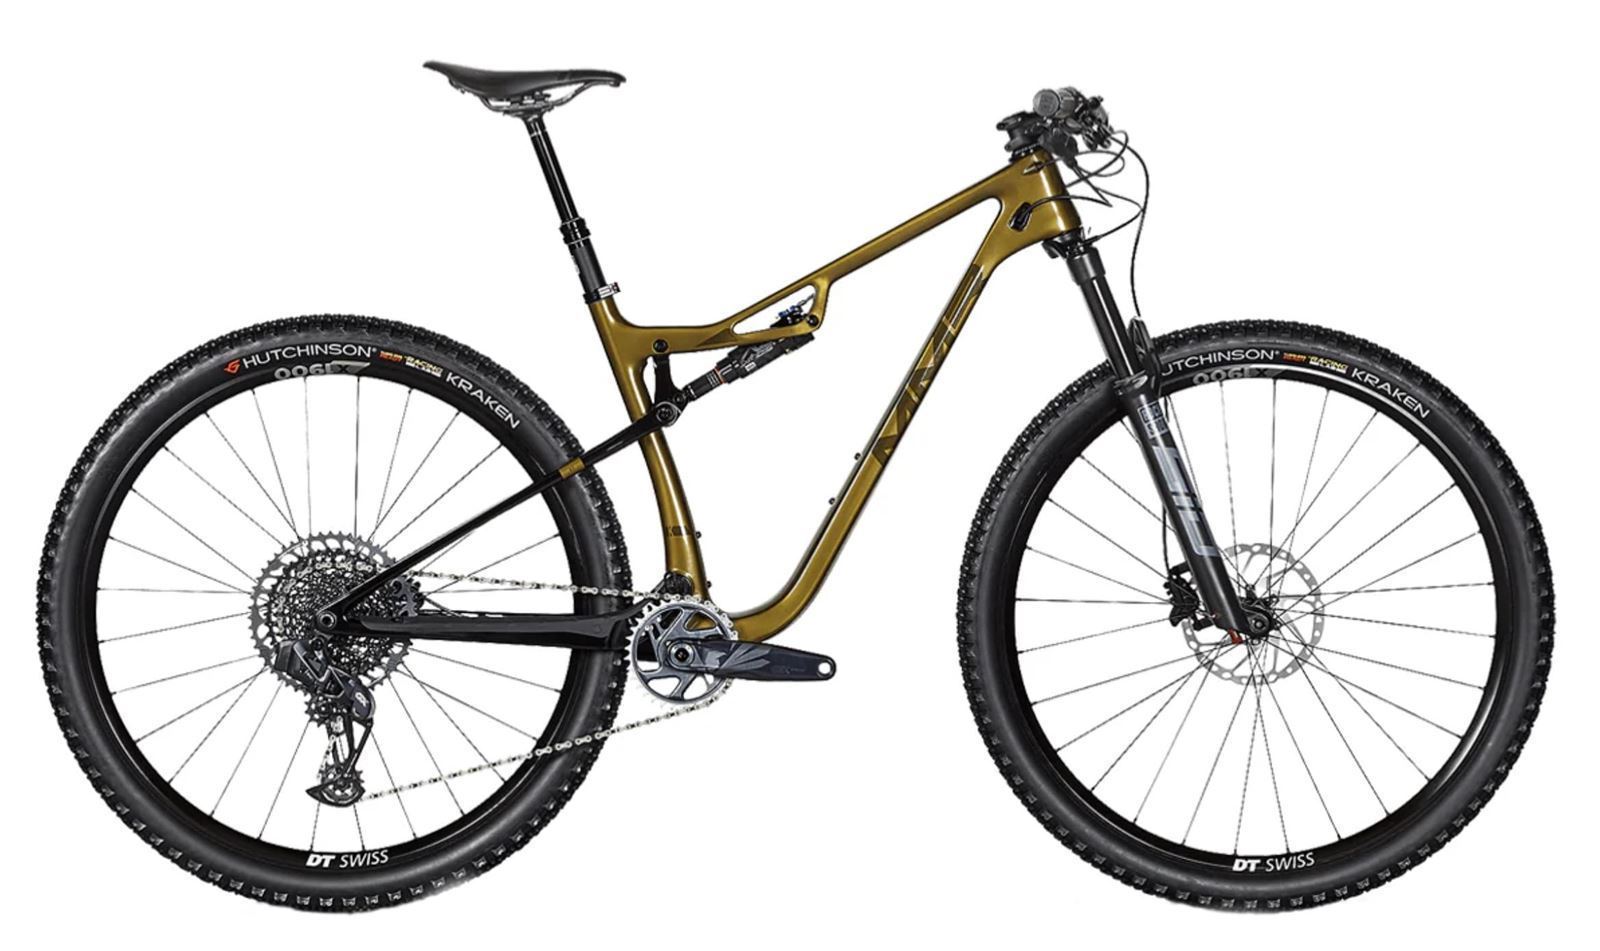 Bicicleta MTB 29¨ MMR KENTA SXC, dorado oscuro - Imagen 1